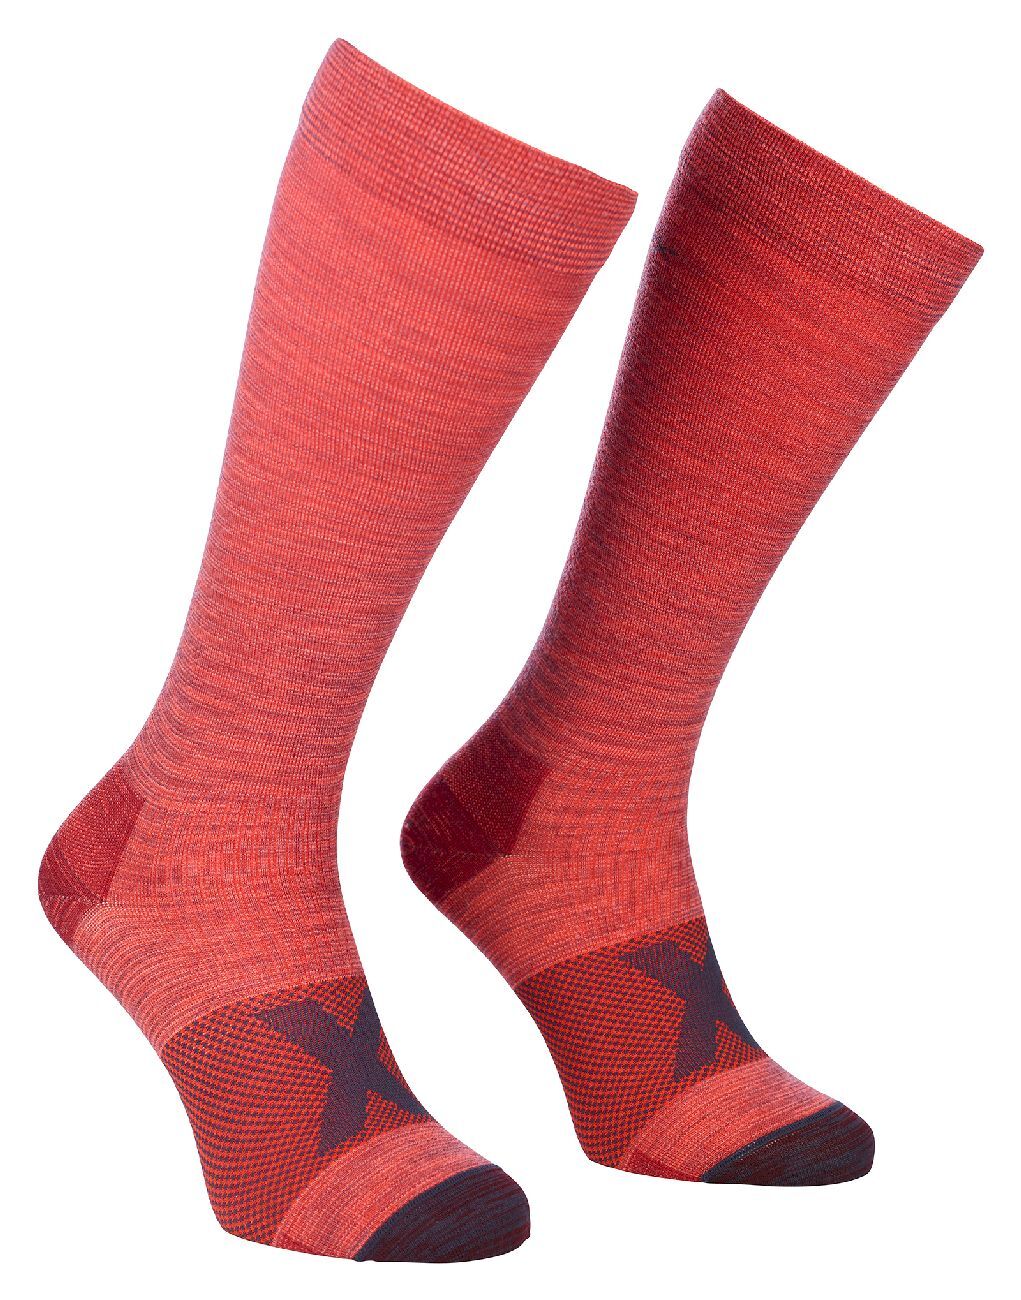 Ortovox Tour Compression Long Socks - Ski socks - Women's